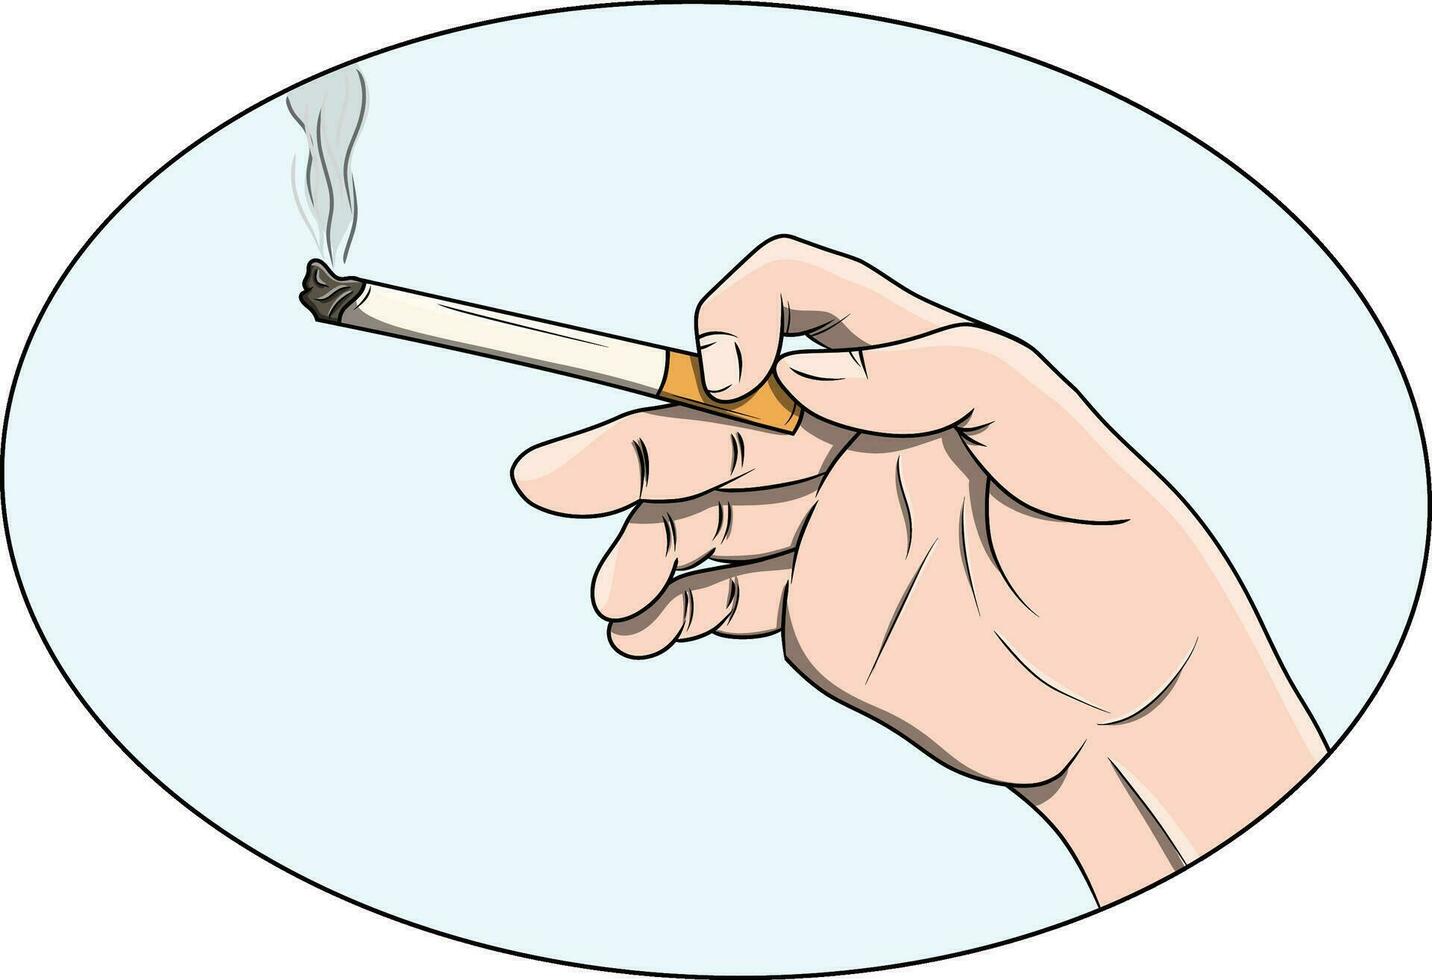 humano mano con un iluminado cigarrillo aislado dibujo vector